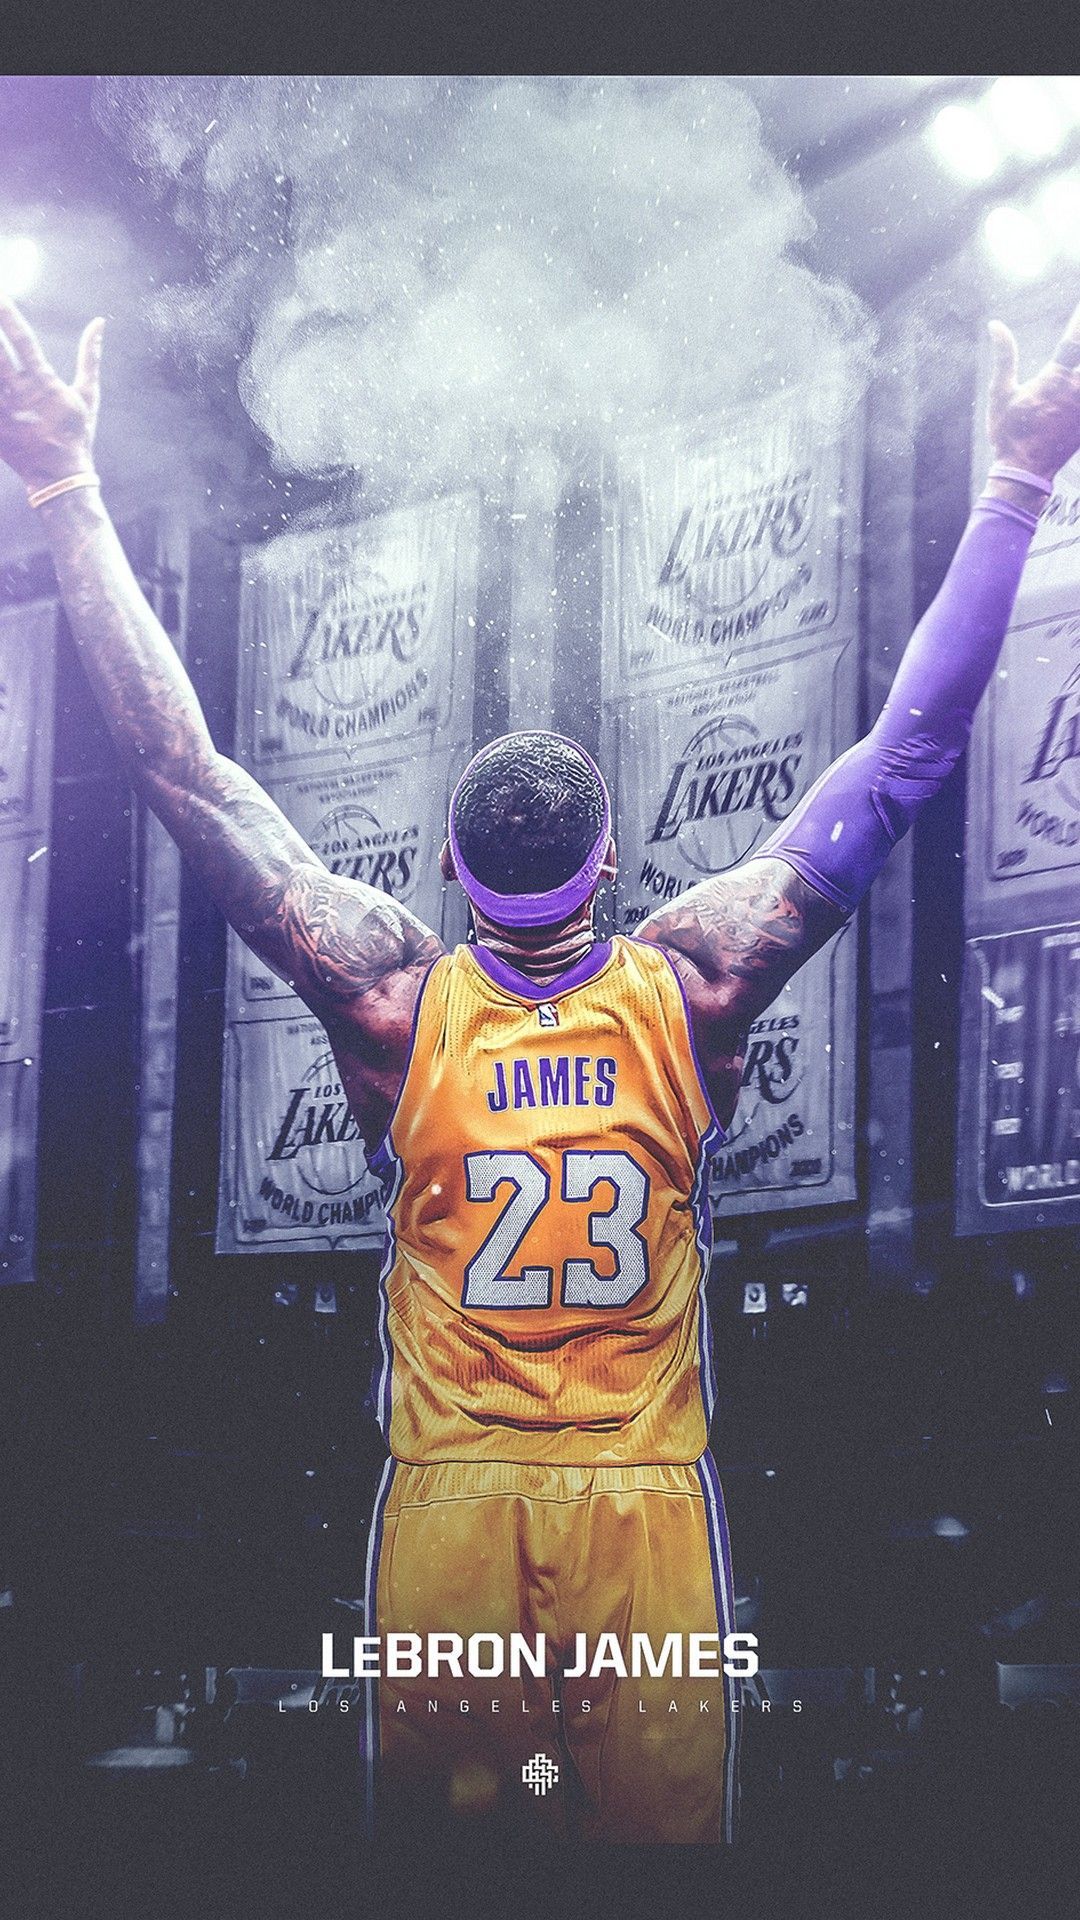 LeBron James LA Lakers HD Wallpaper For iPhone Basketball Wallpaper. Lebron james wallpaper, Lebron james poster, Basketball wallpaper hd